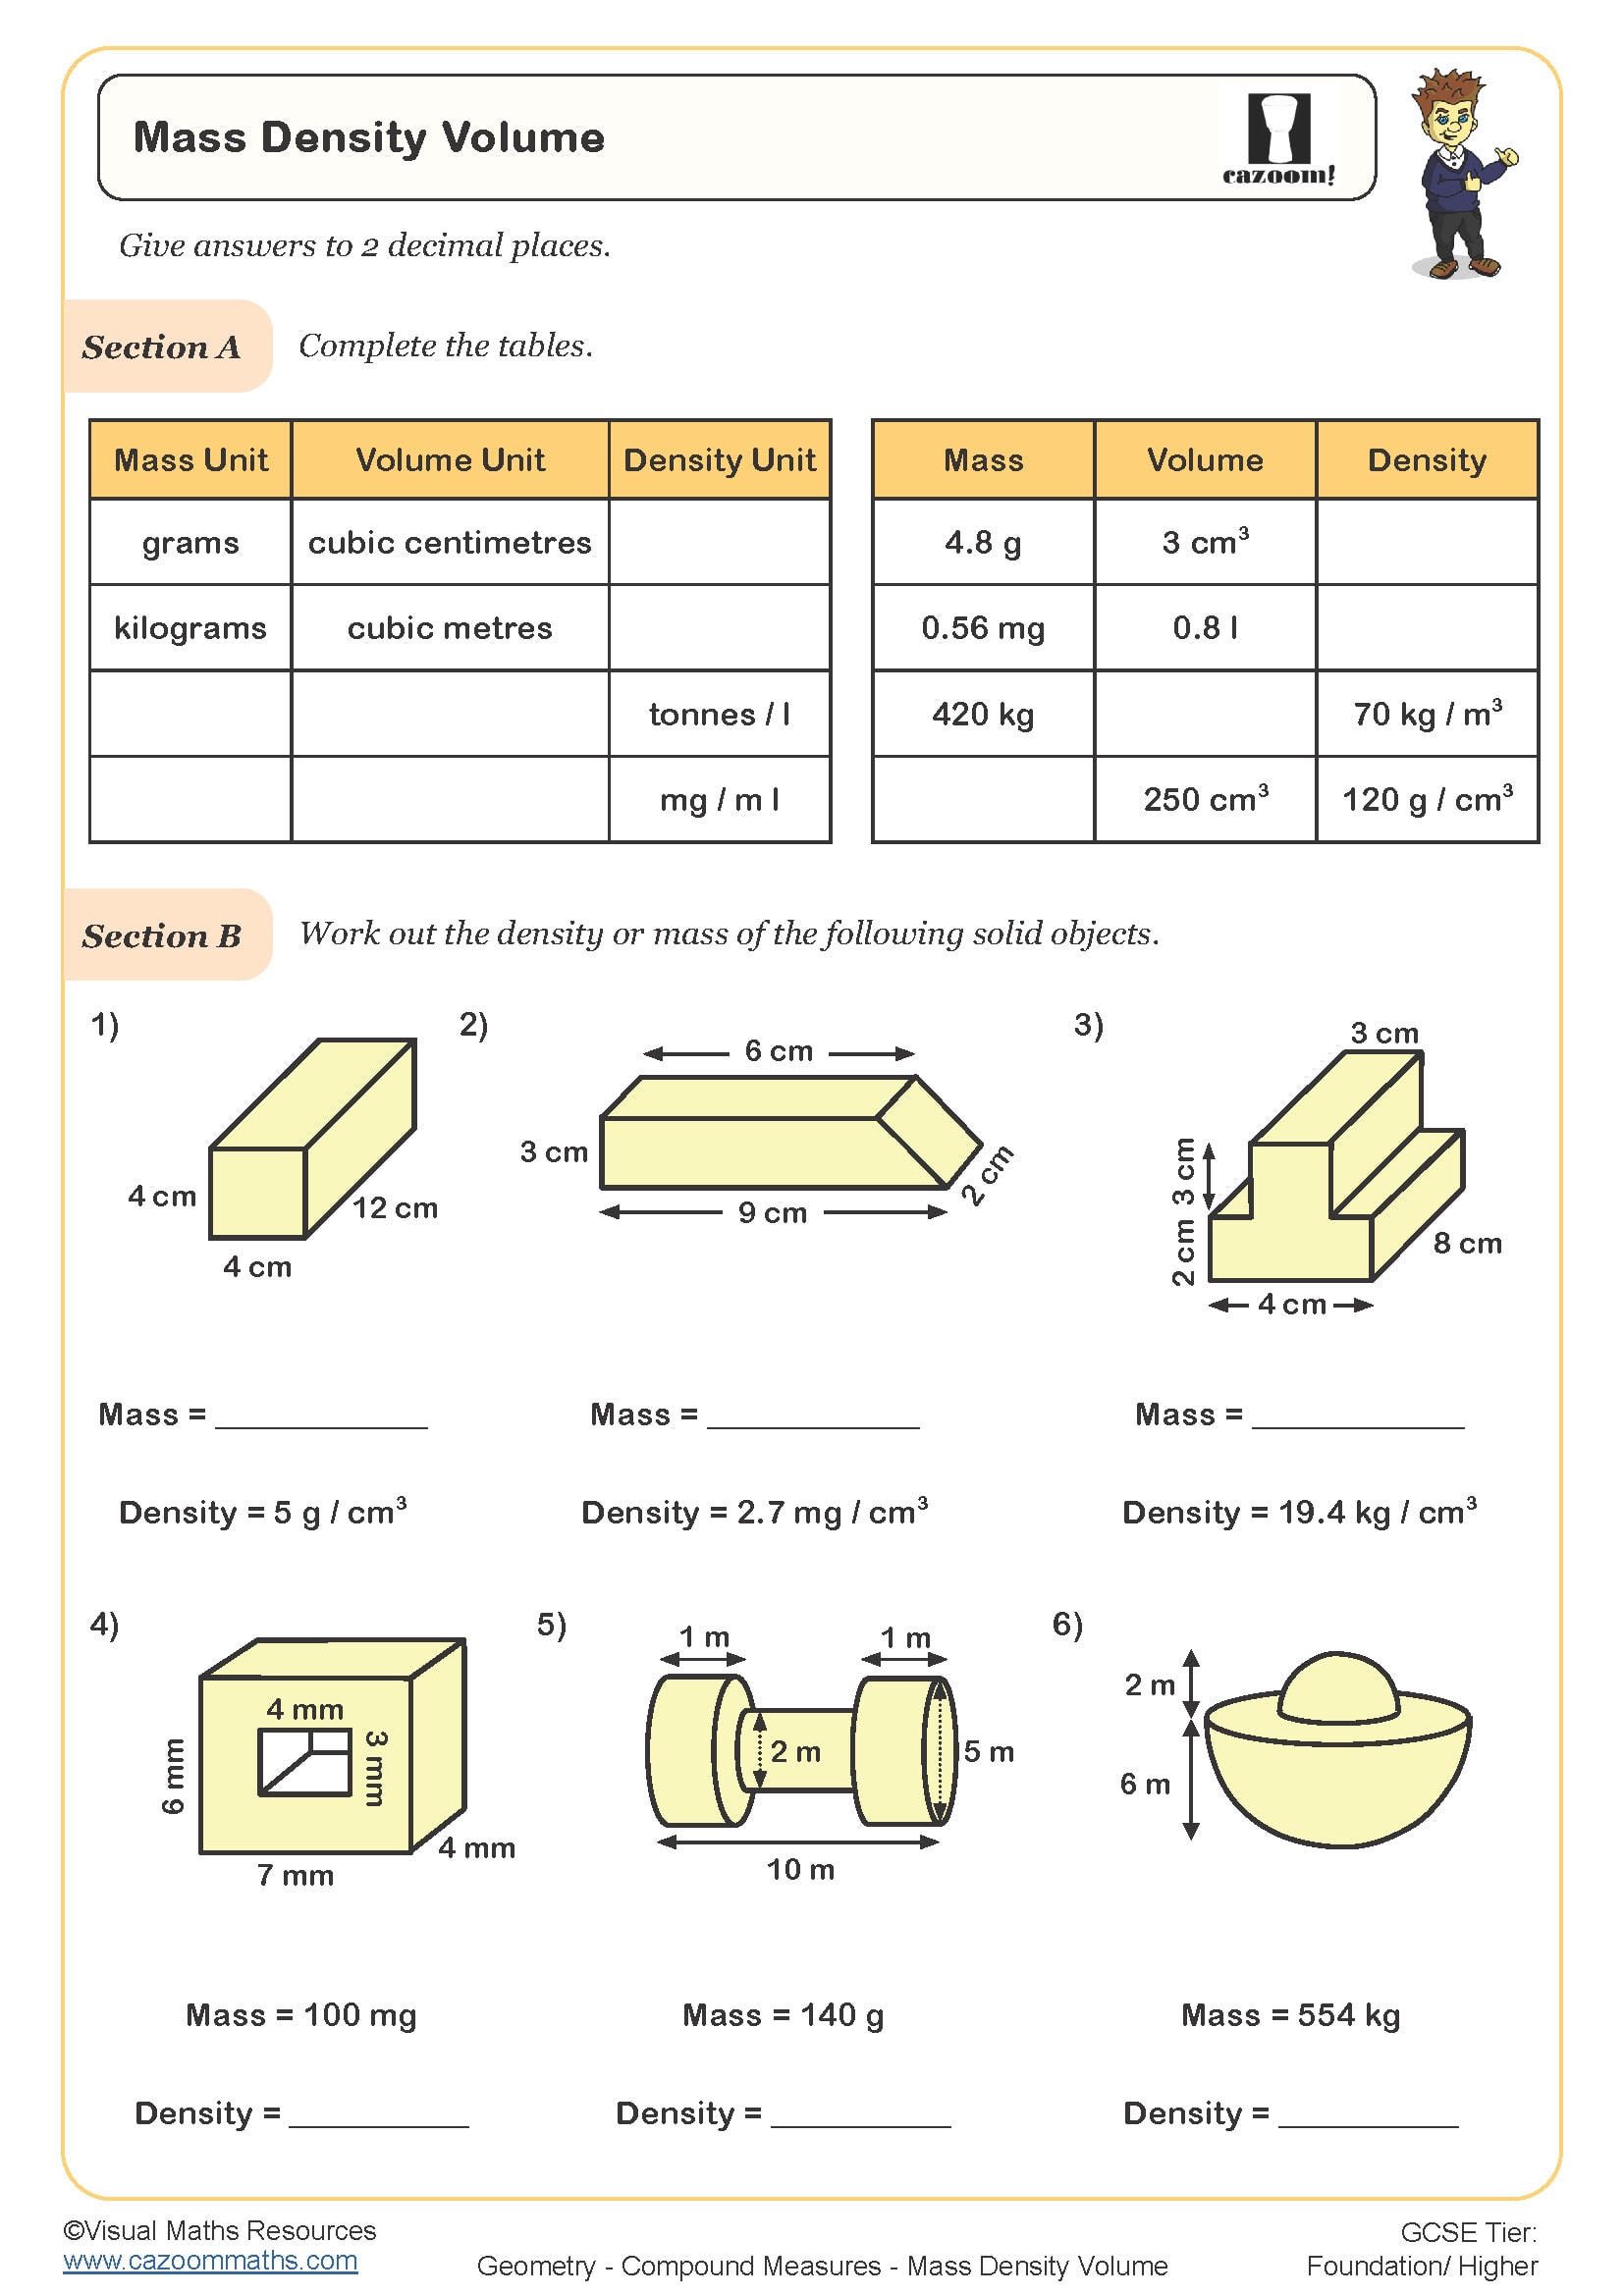 Mass Density Volume Worksheet suitable for students in KS3 and KS4